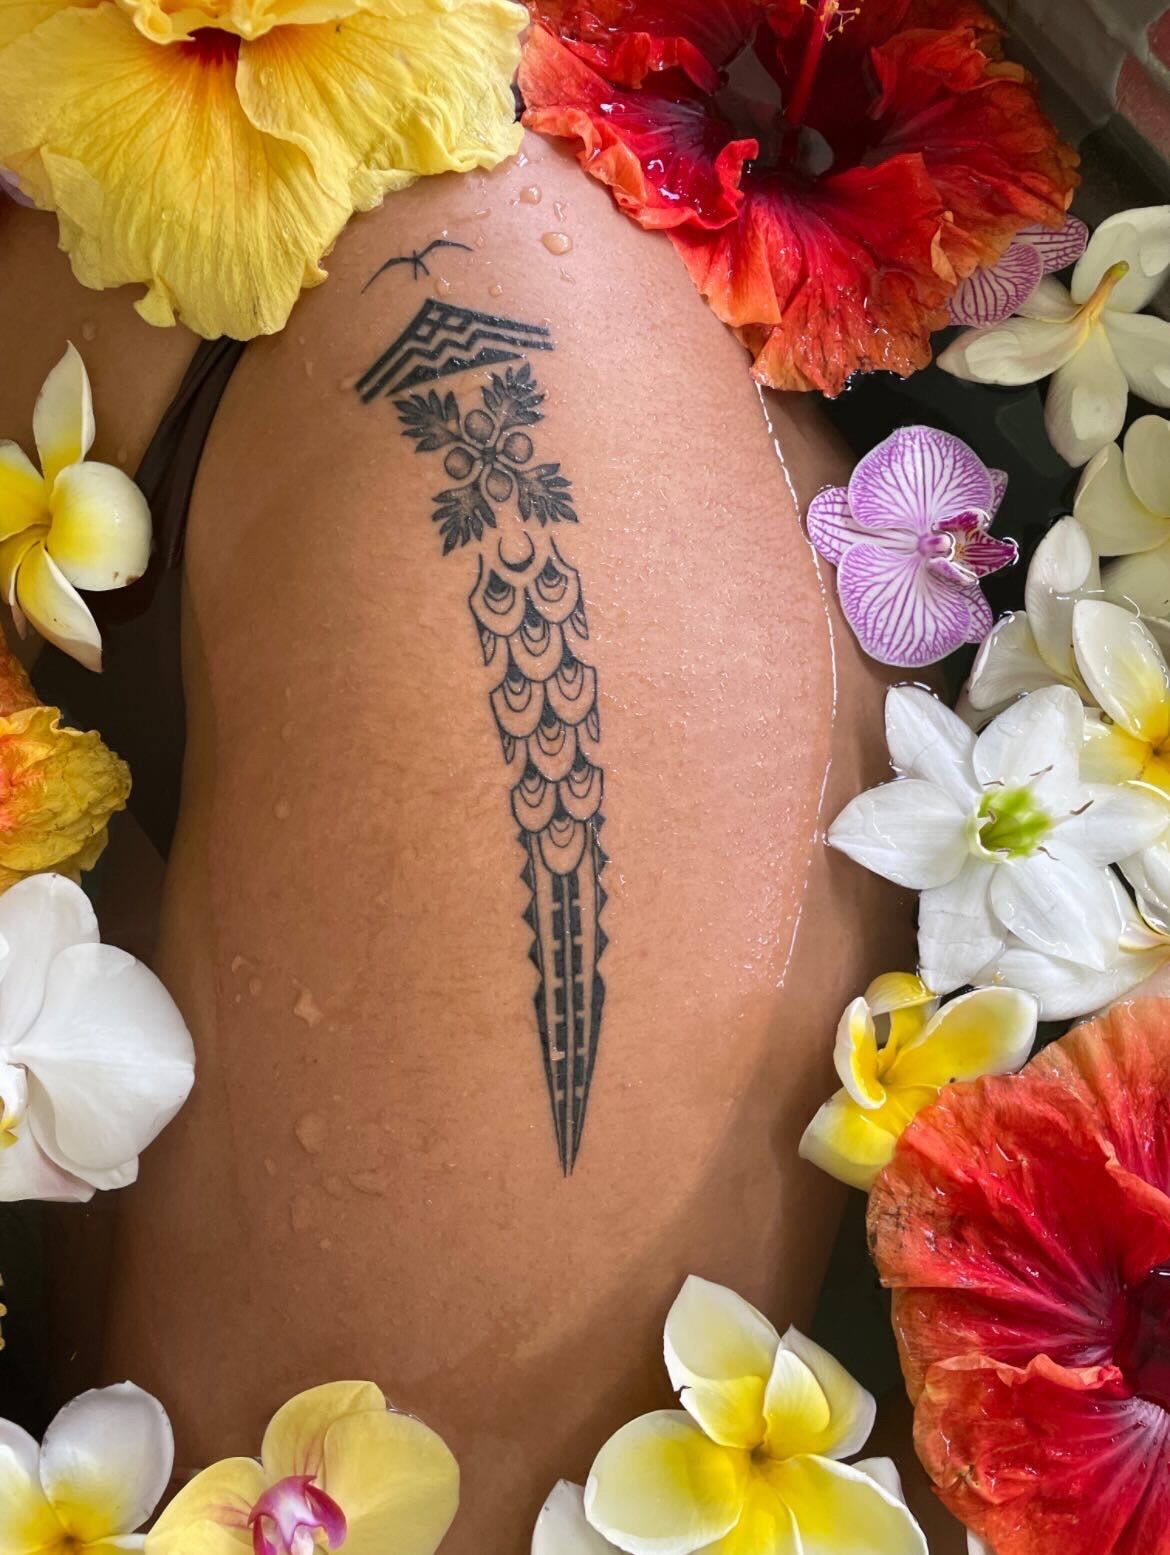 Preserving Indigenous culture through tattoos